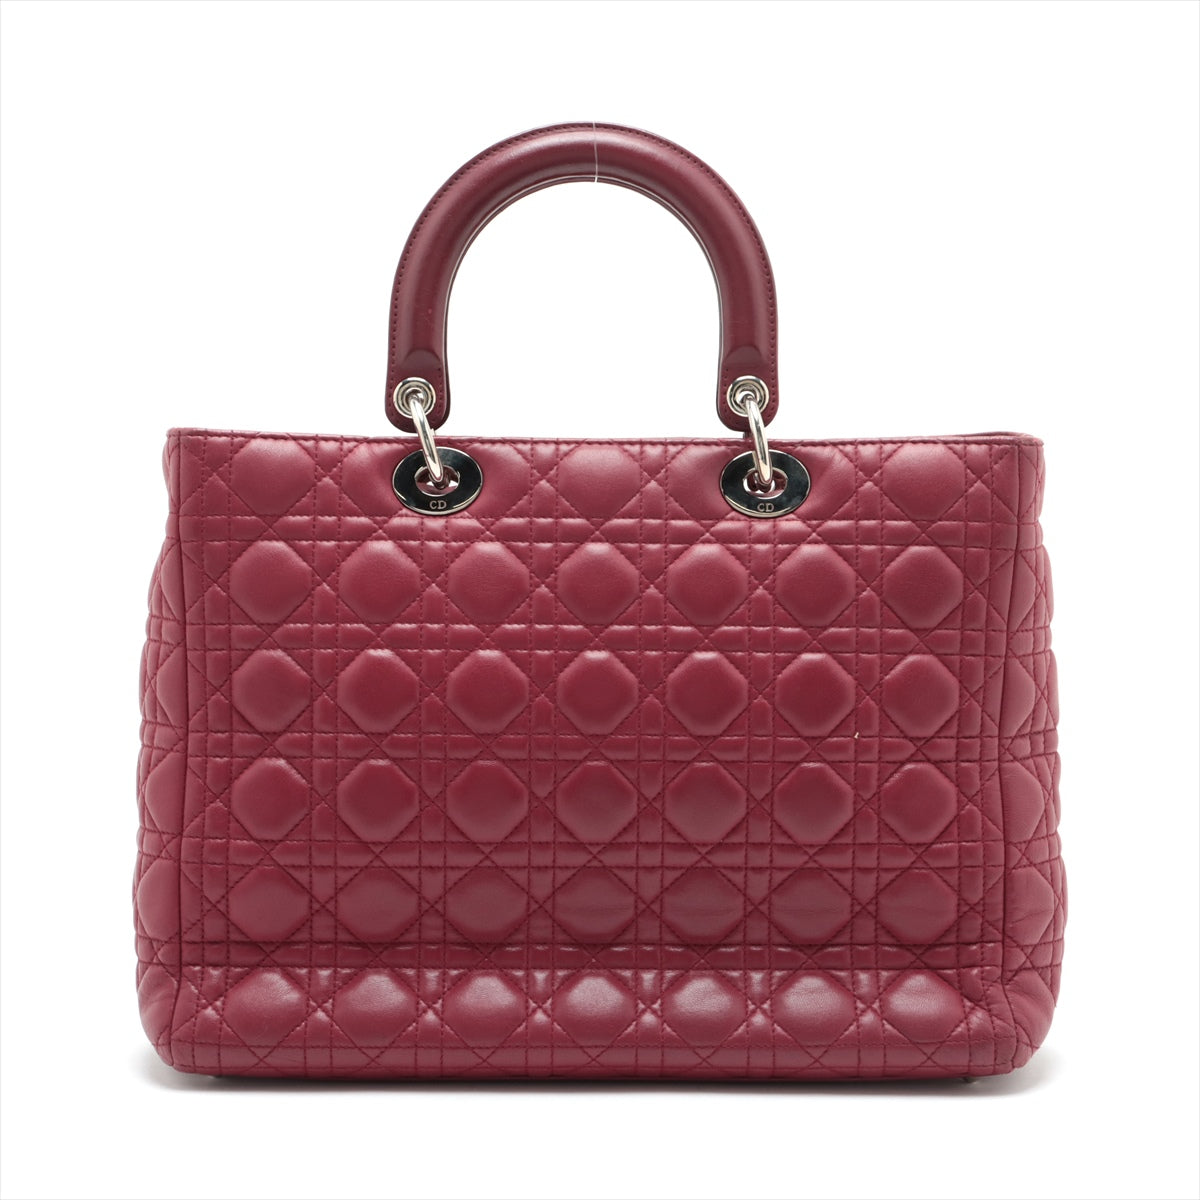 Christian Dior Lady Dior Cannage Leather 2way handbag Bordeaux